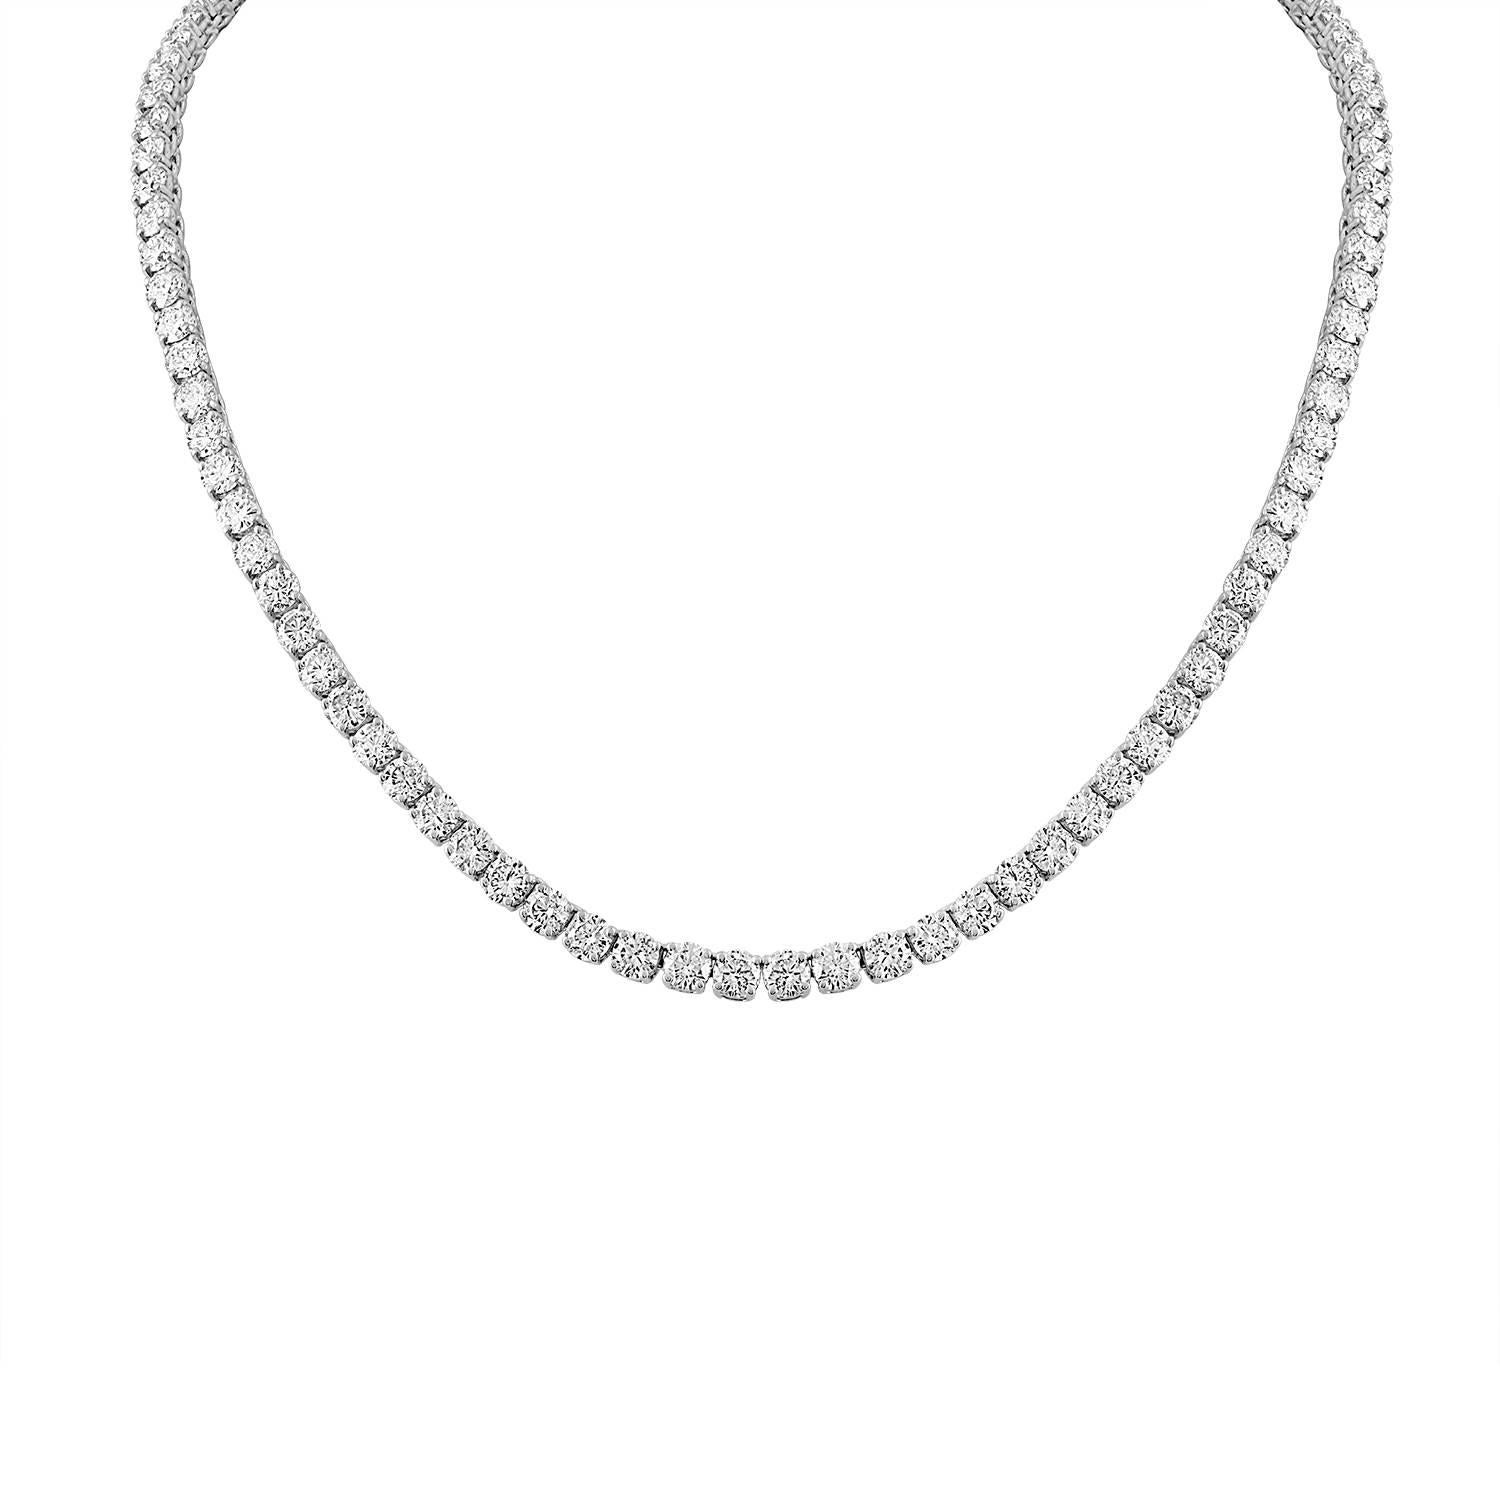 50 carat diamond necklace price